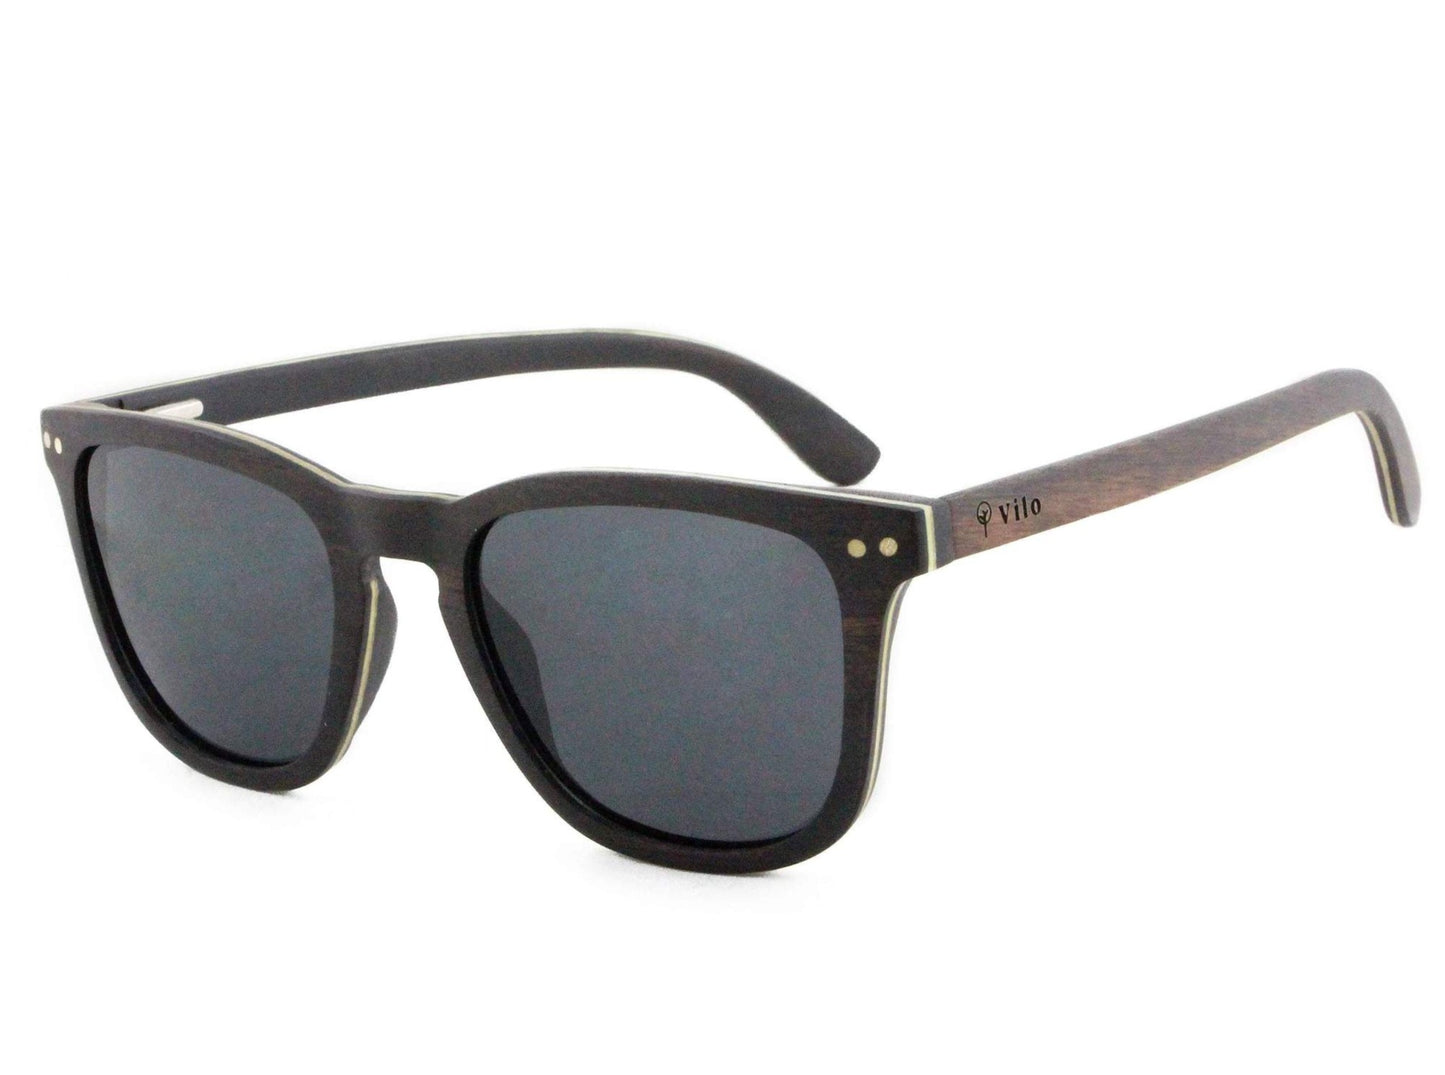 Wooden sunglasses Molasses